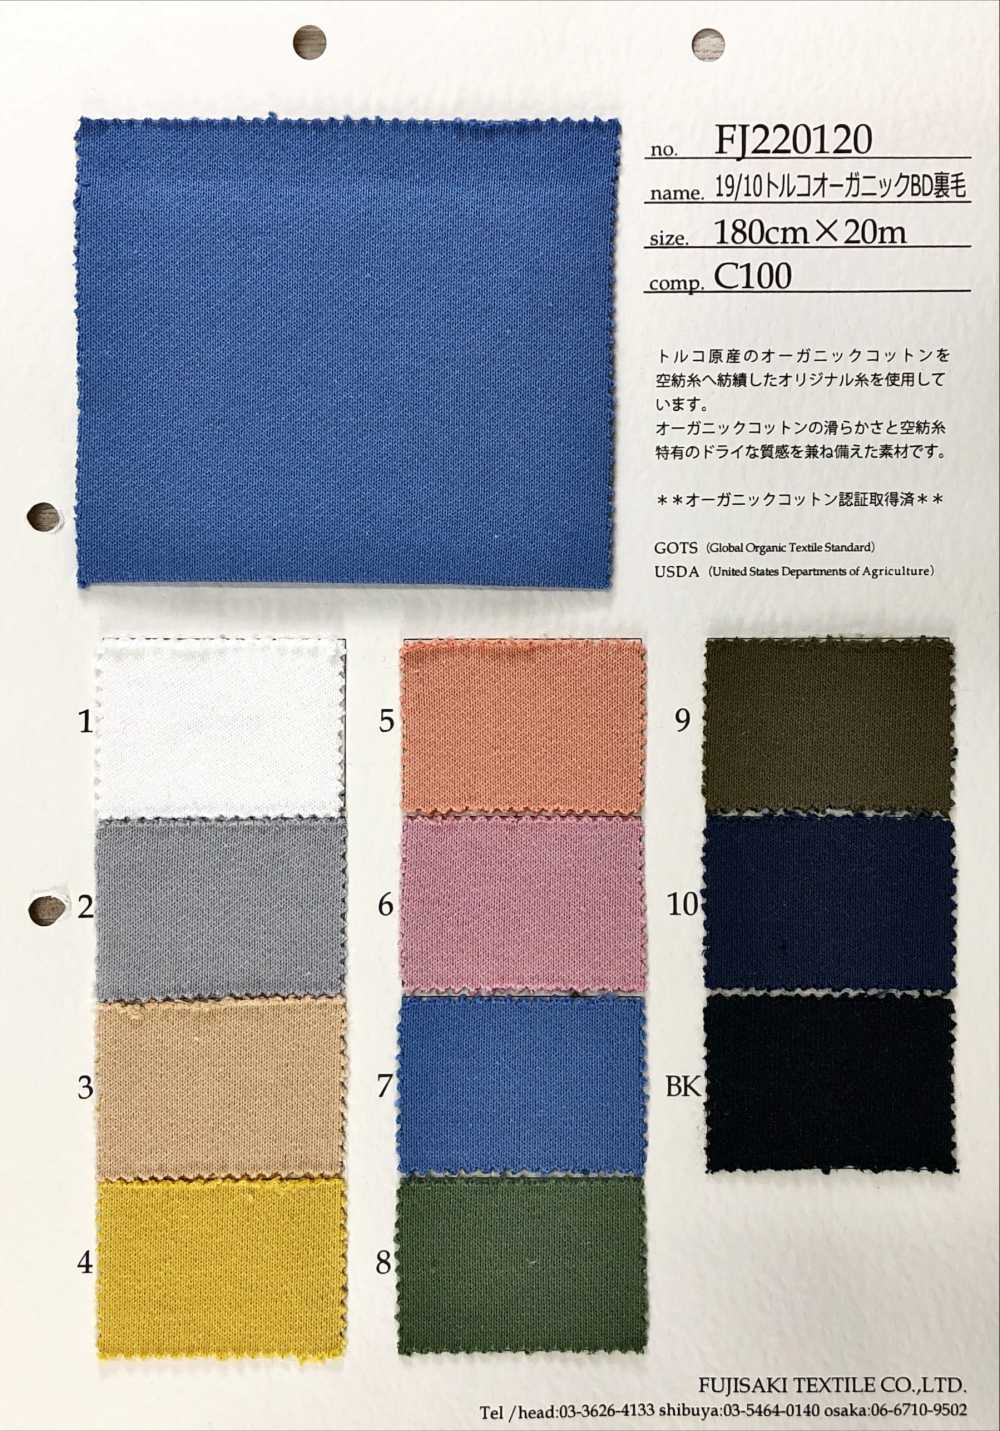 FJ220120 19/10 Türkisches Bio-BD-Fleece[Textilgewebe] Fujisaki Textile